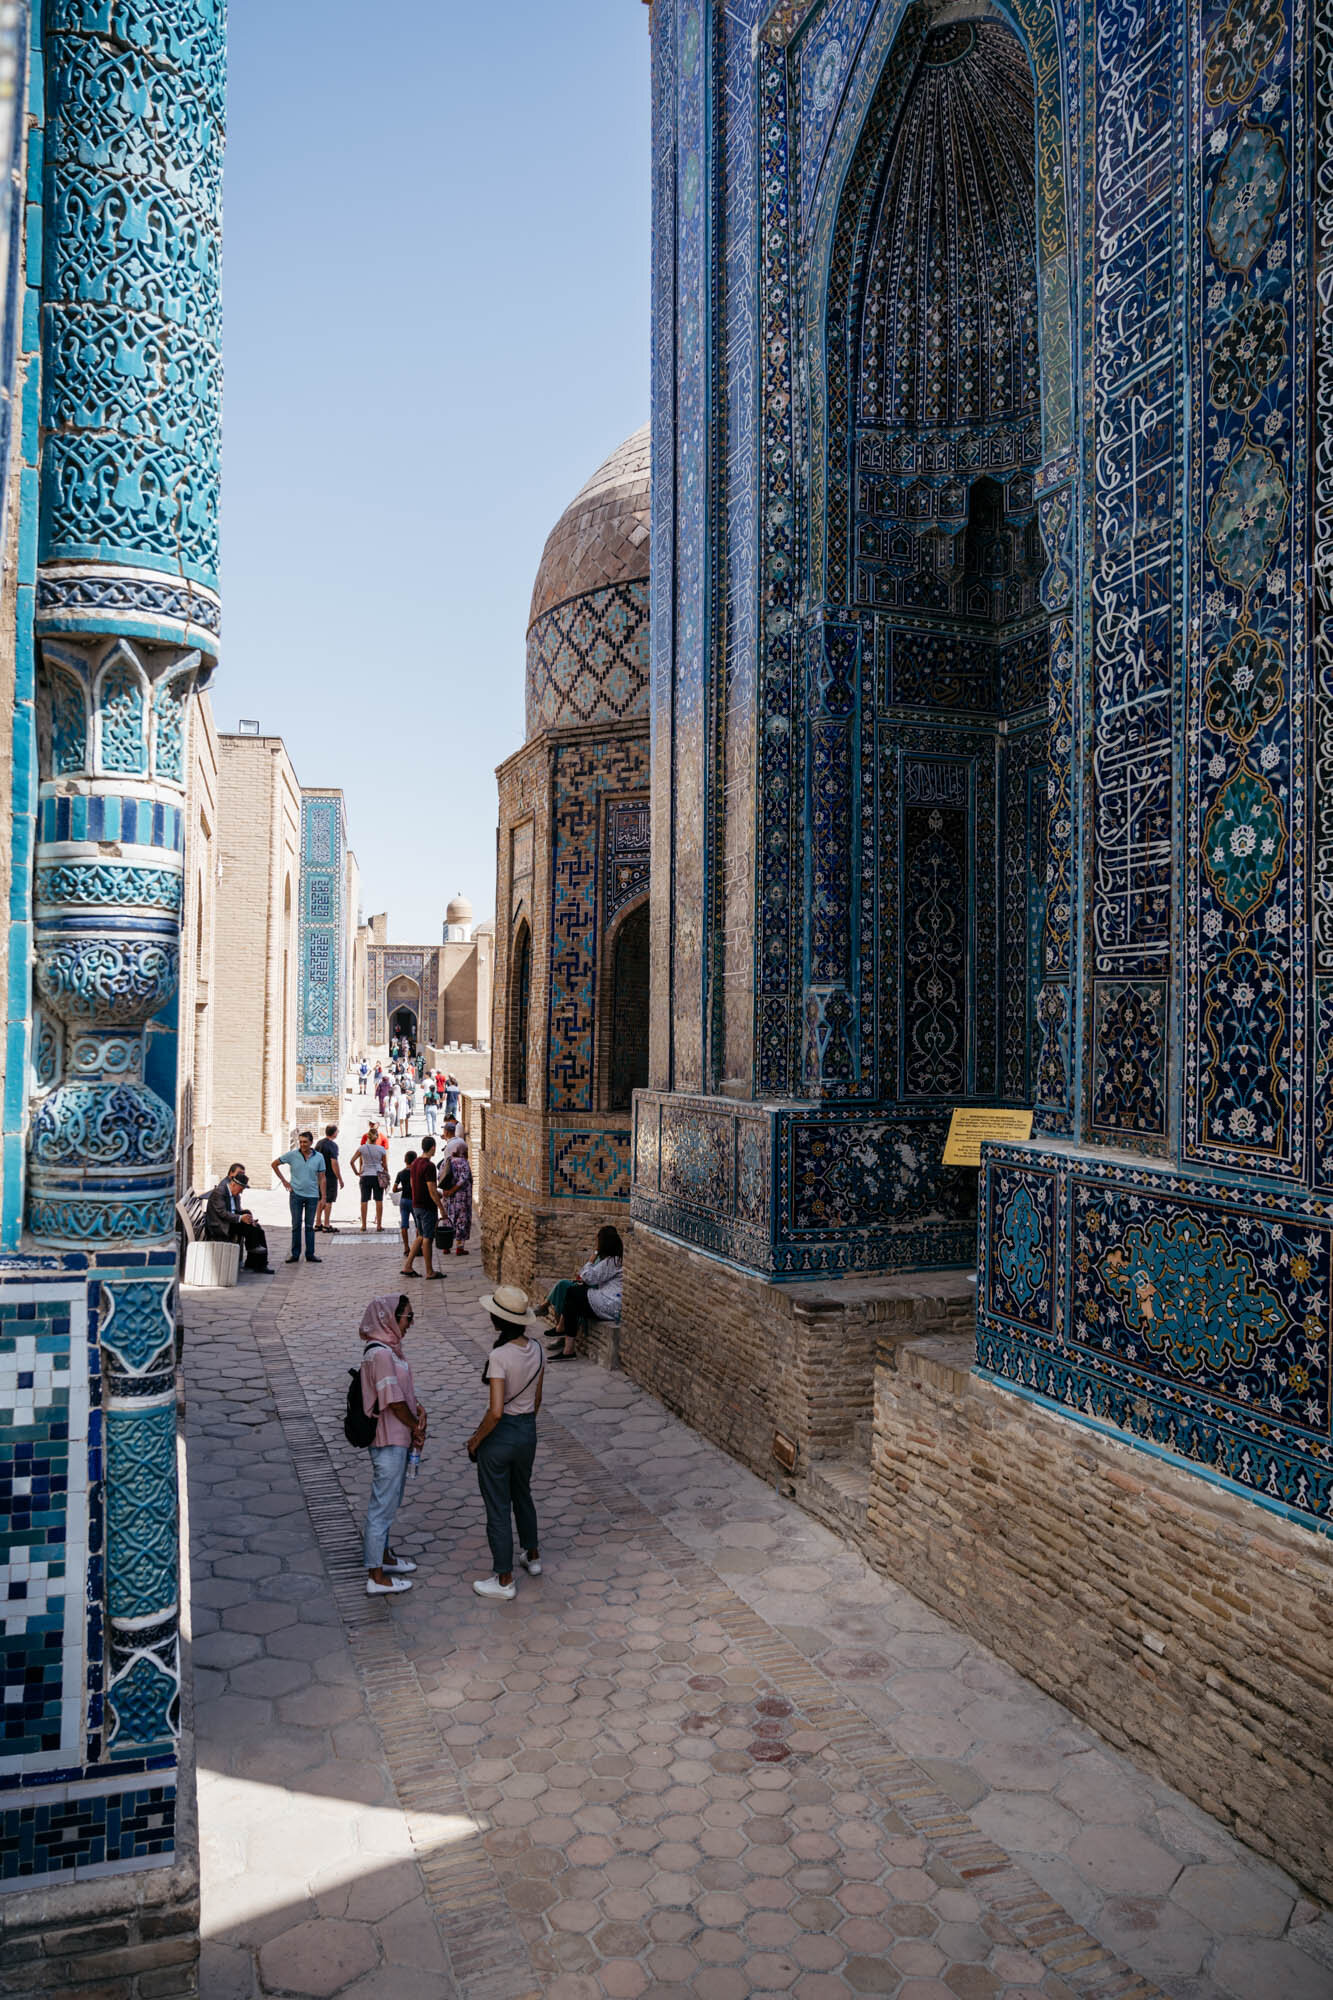  The Shah-i-Zinda tomb complex, Samarkand 